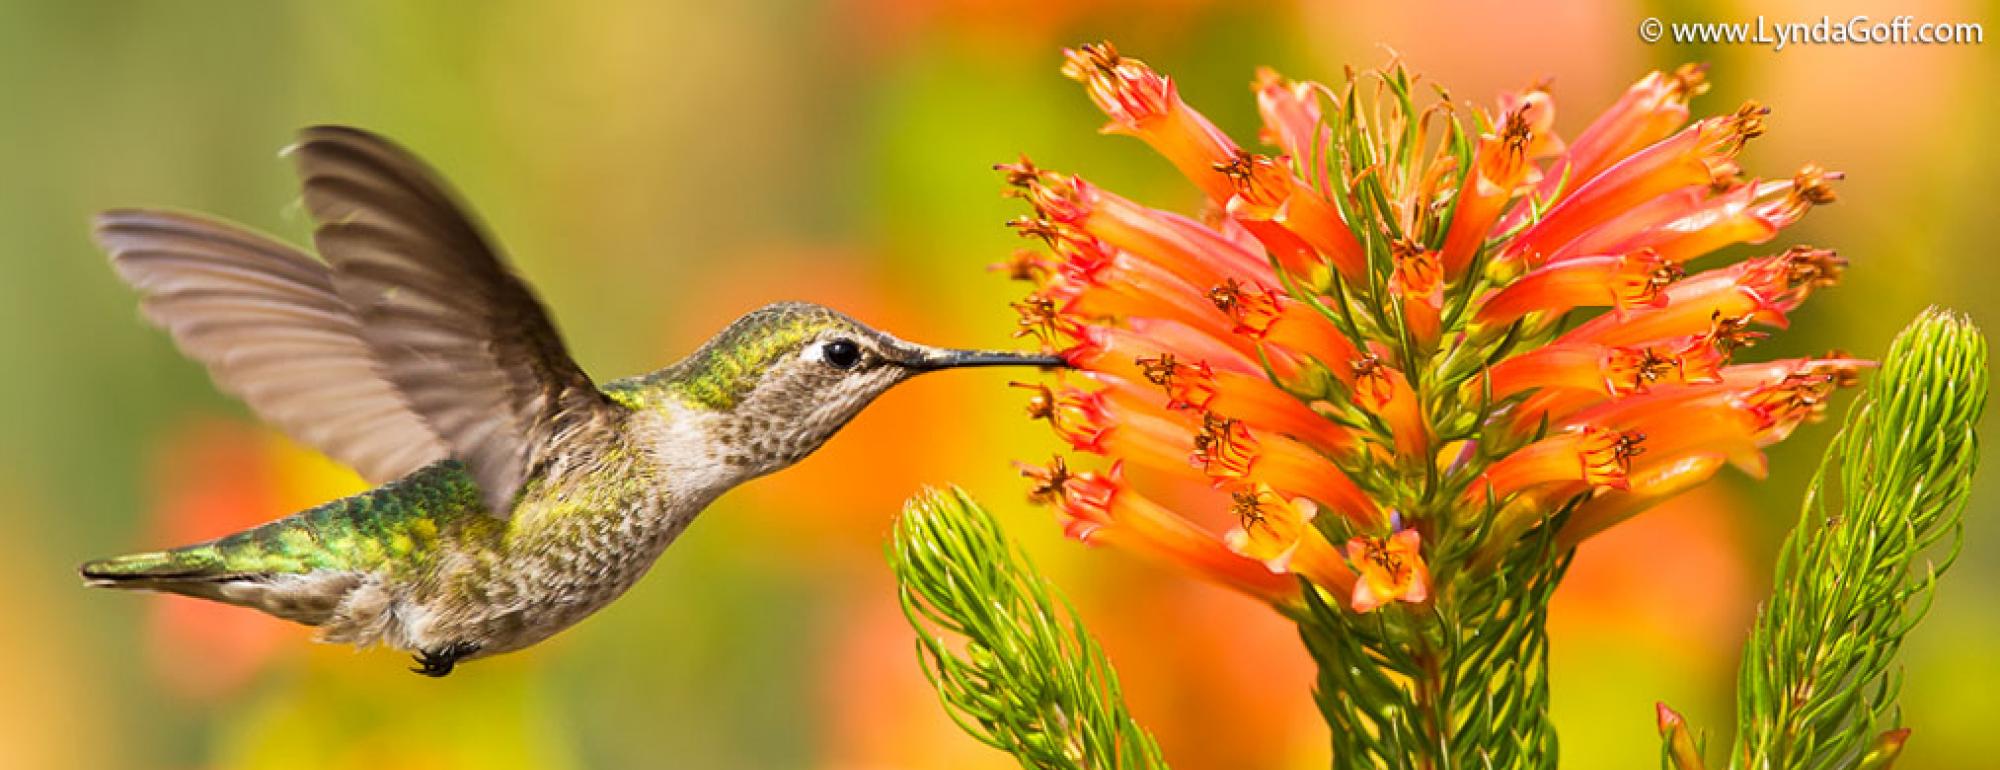 A hummingbird in flight, visiting an orange flower